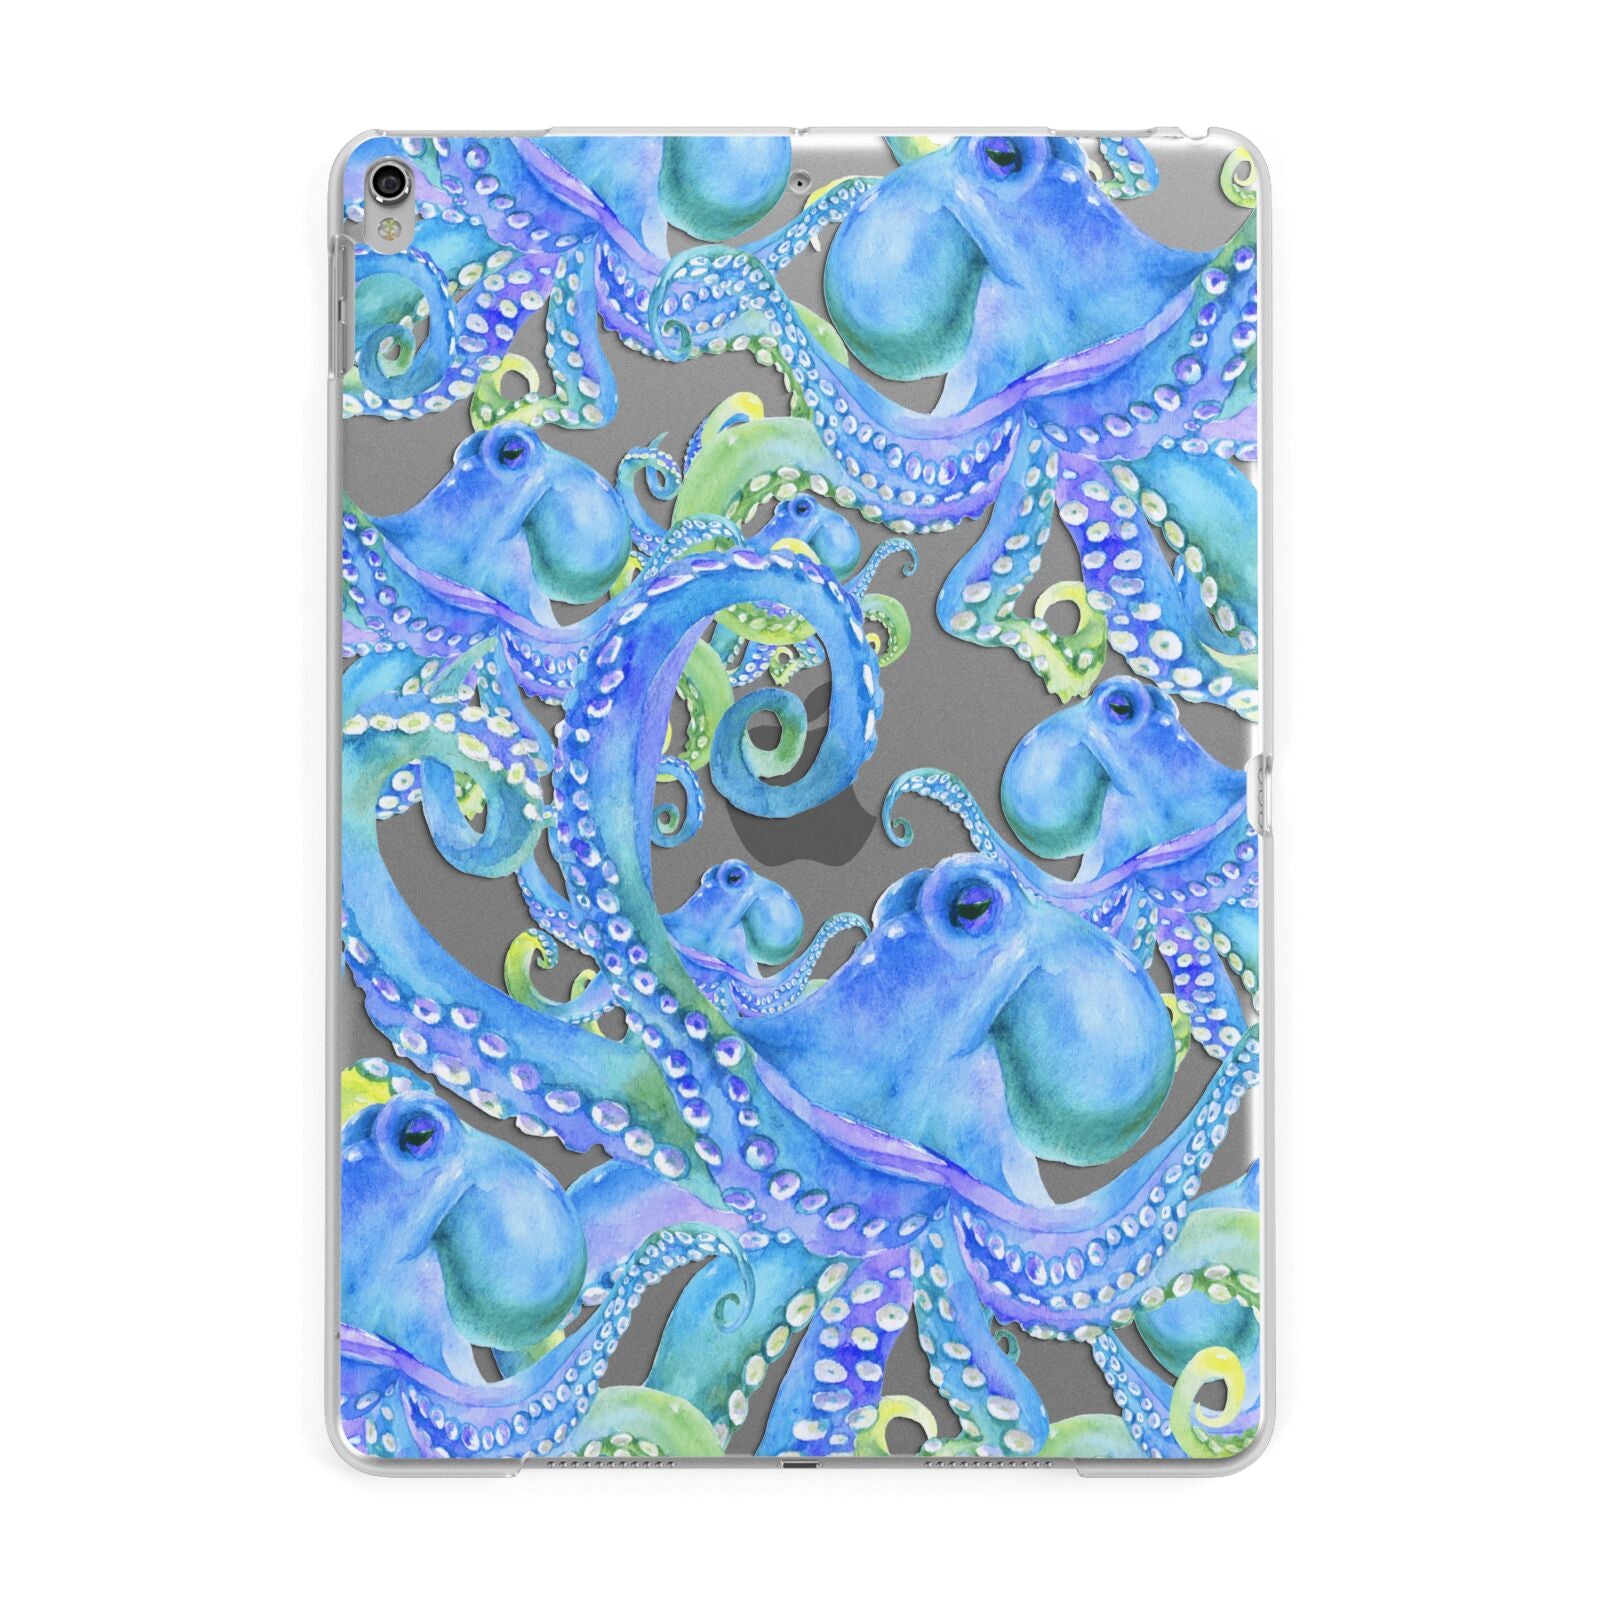 Octopus Apple iPad Silver Case